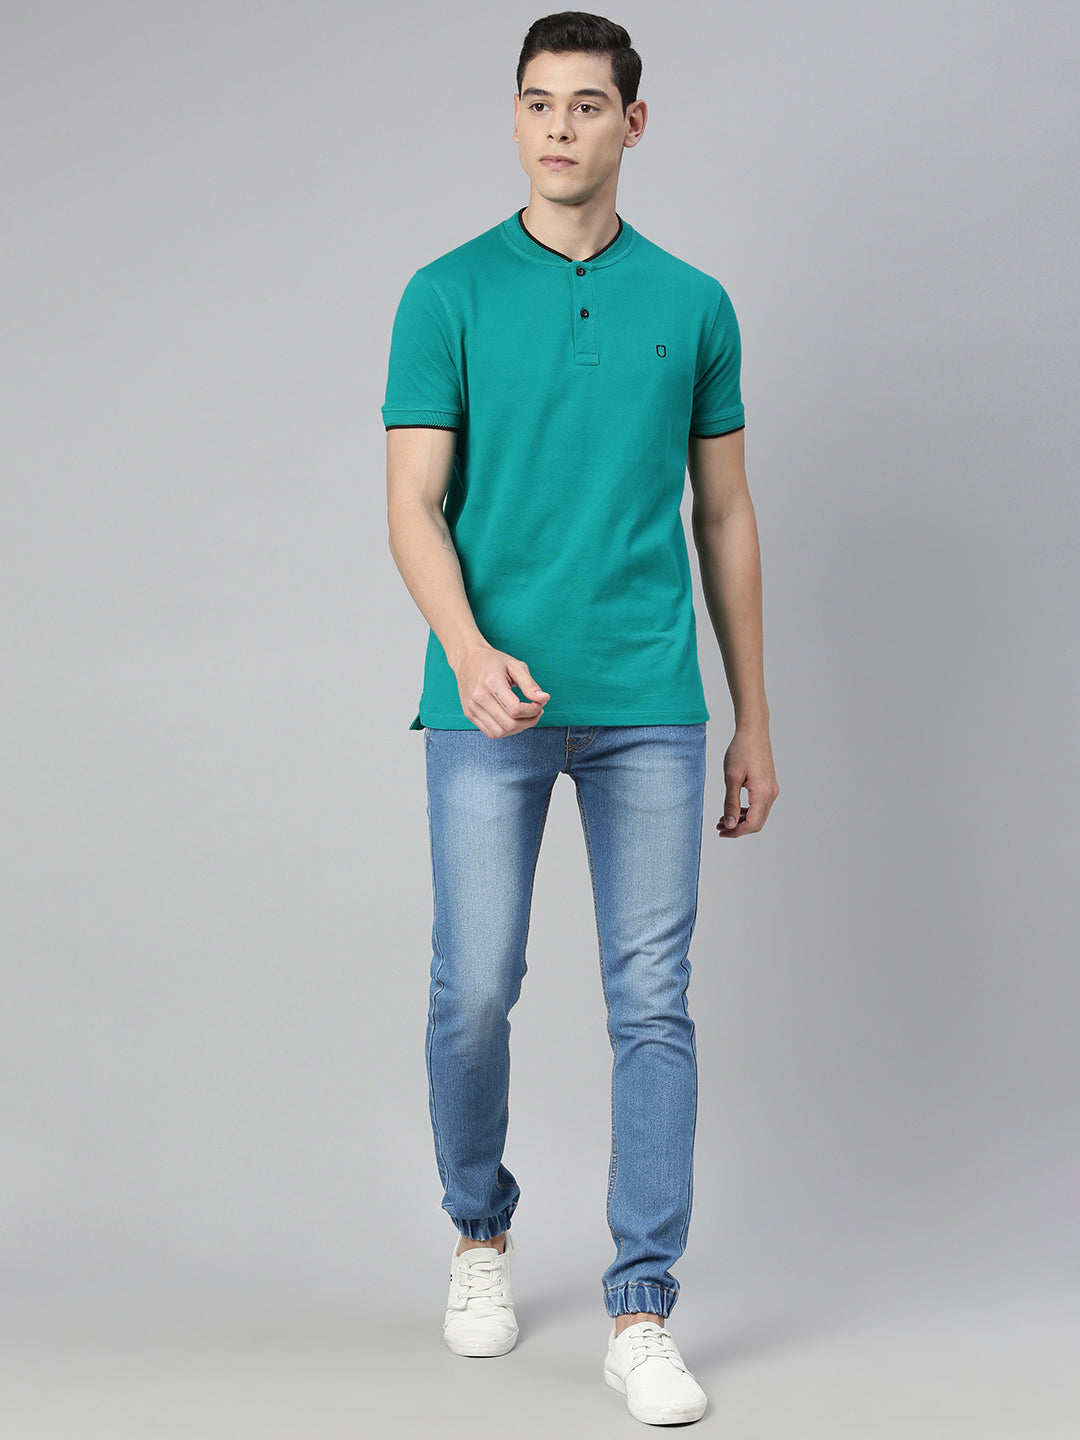 Men's Teal Green Solid Mandarin Collar Slim Fit Cotton Polo T-Shirt